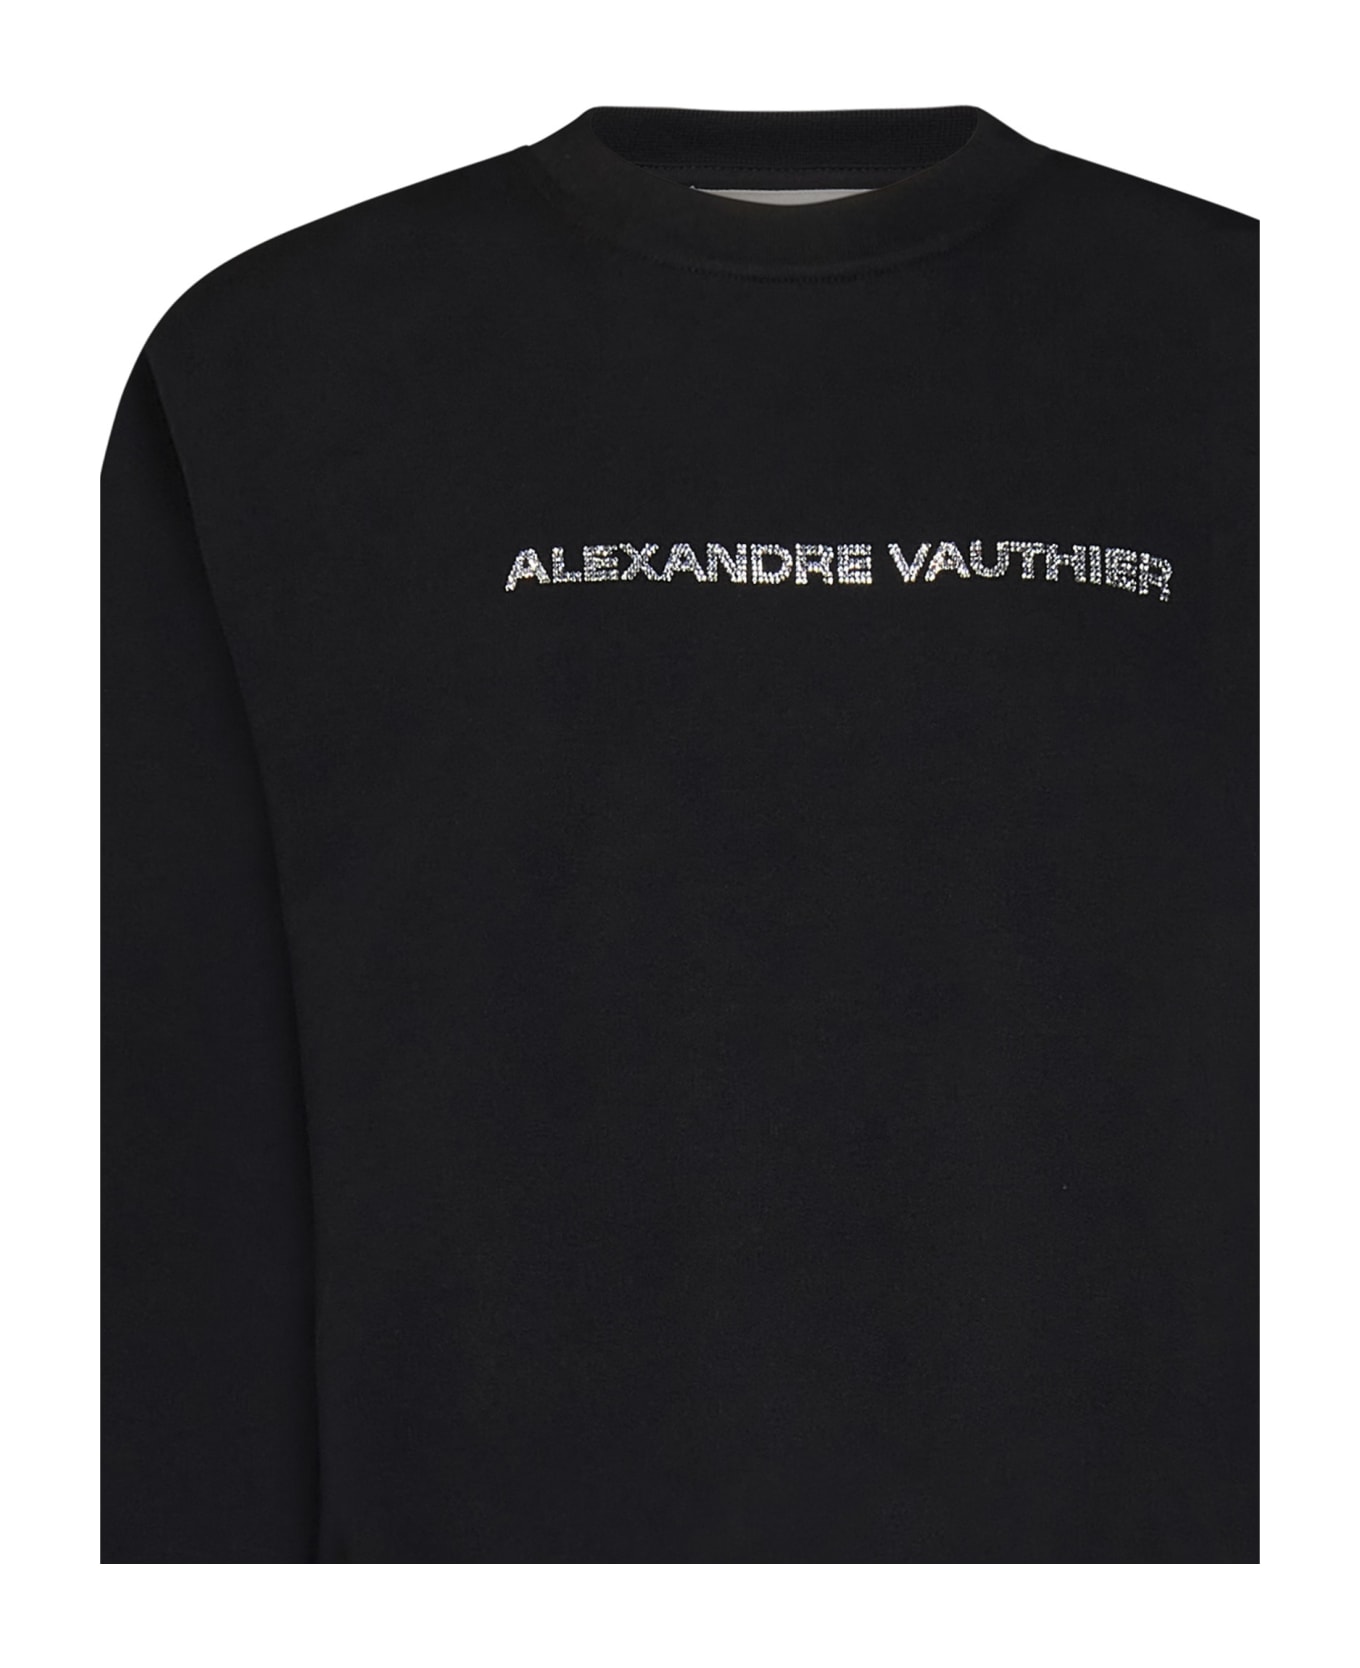 Alexandre Vauthier Sweatshirt - Black フリース